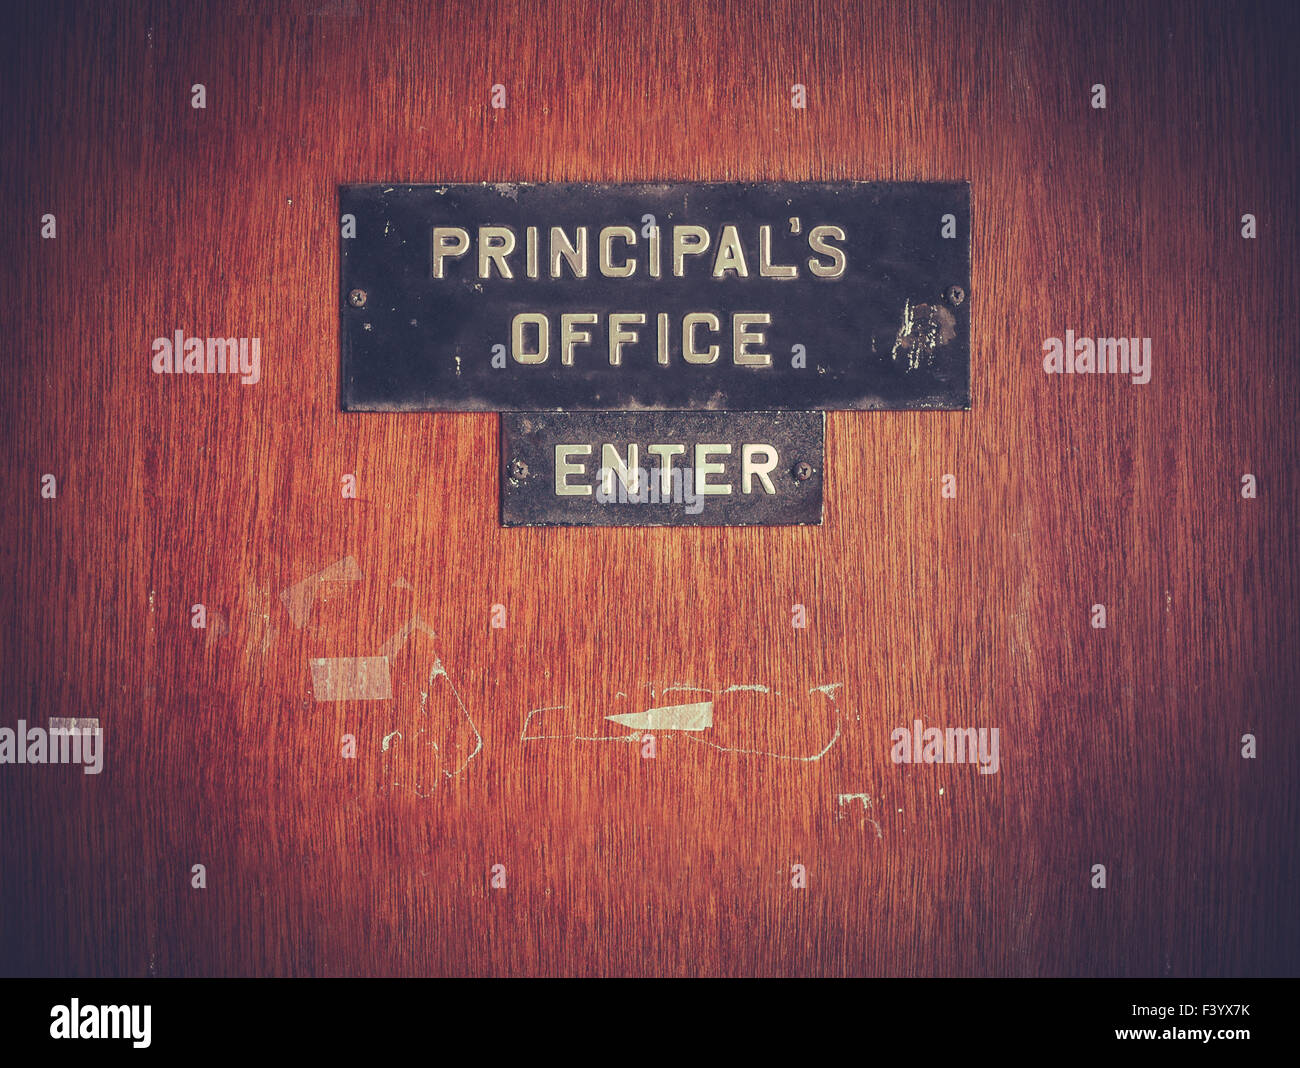 Retro Grunge Principal Office Stock Photo